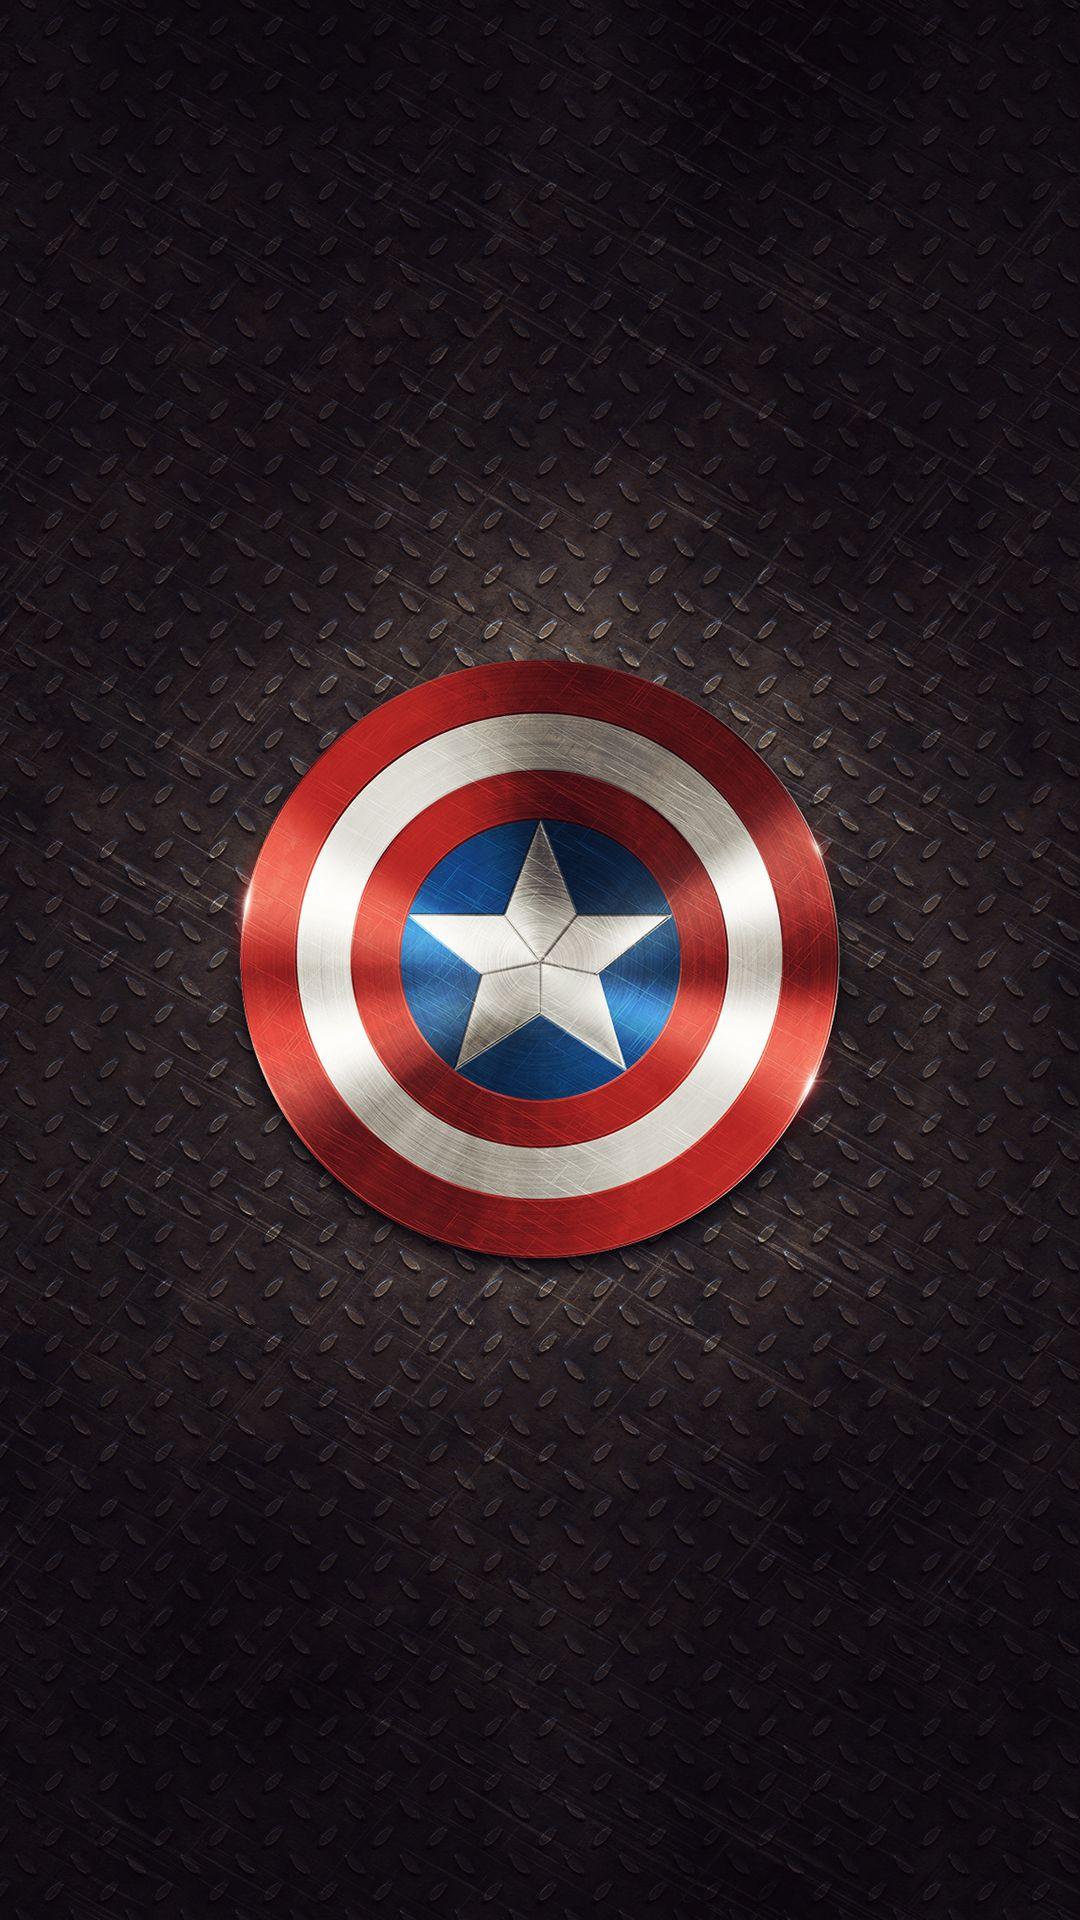 1080x1920 HD iPhone | Captain america shield wallpaper, Avengers wallpaper, Captain america wallpaper